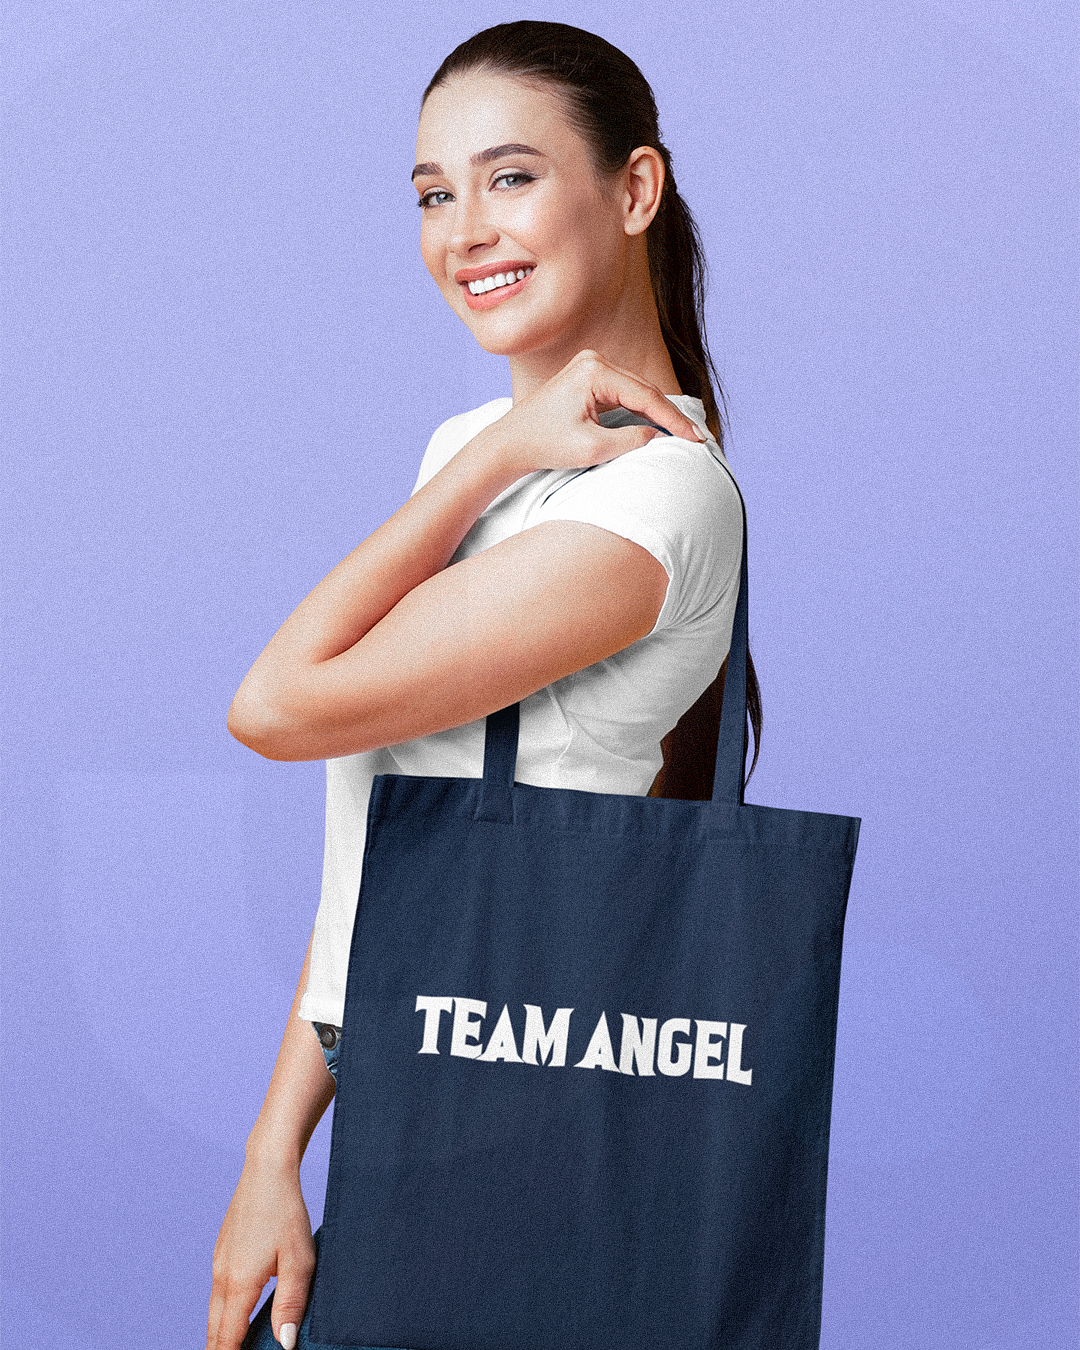 Team Angel Tote Bag - Buffy The Vampire Slayer Inspired Tote Bag - Buffy Angel Tote Bag - Team Angel Buffy The Vampire Slayer Inspired Tote Bag